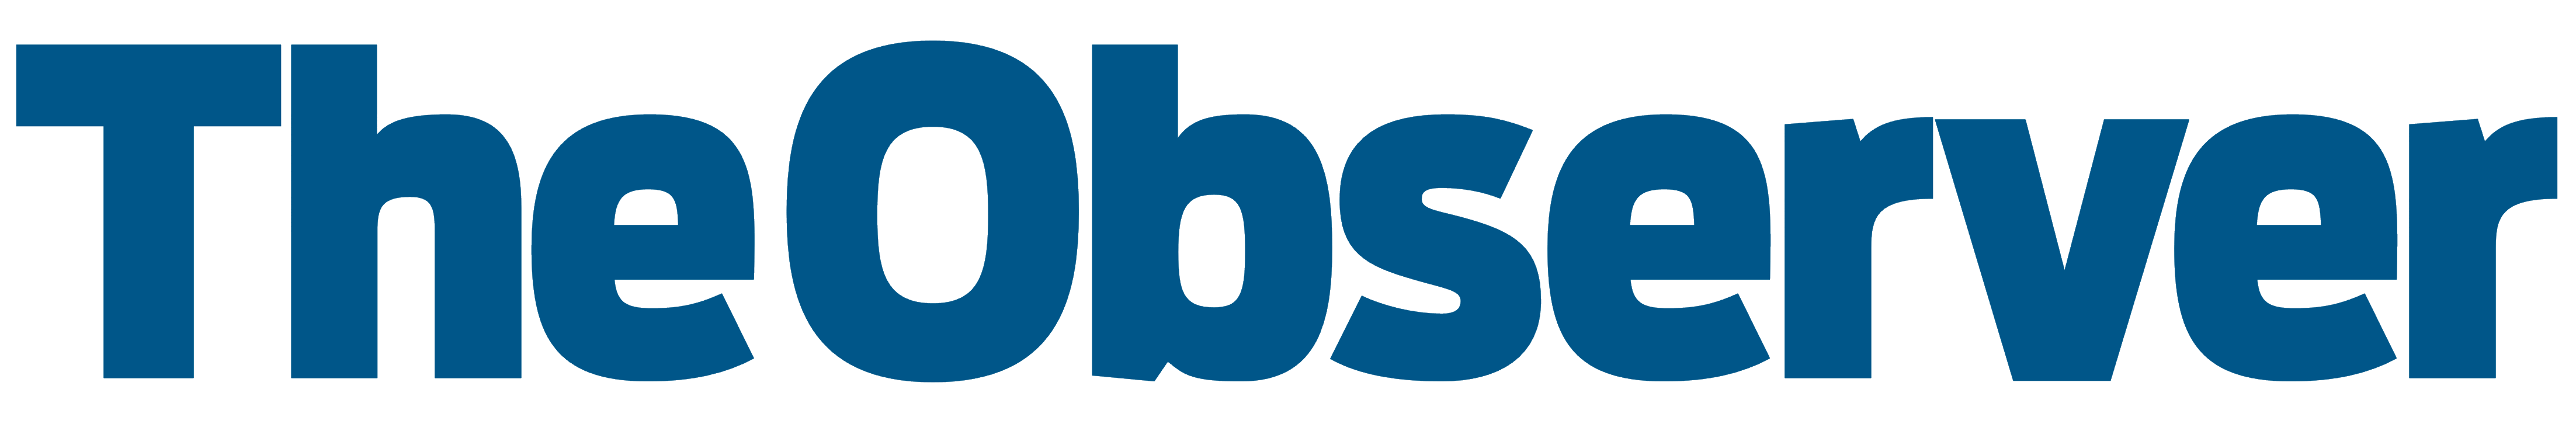 The Observer logo, logotype